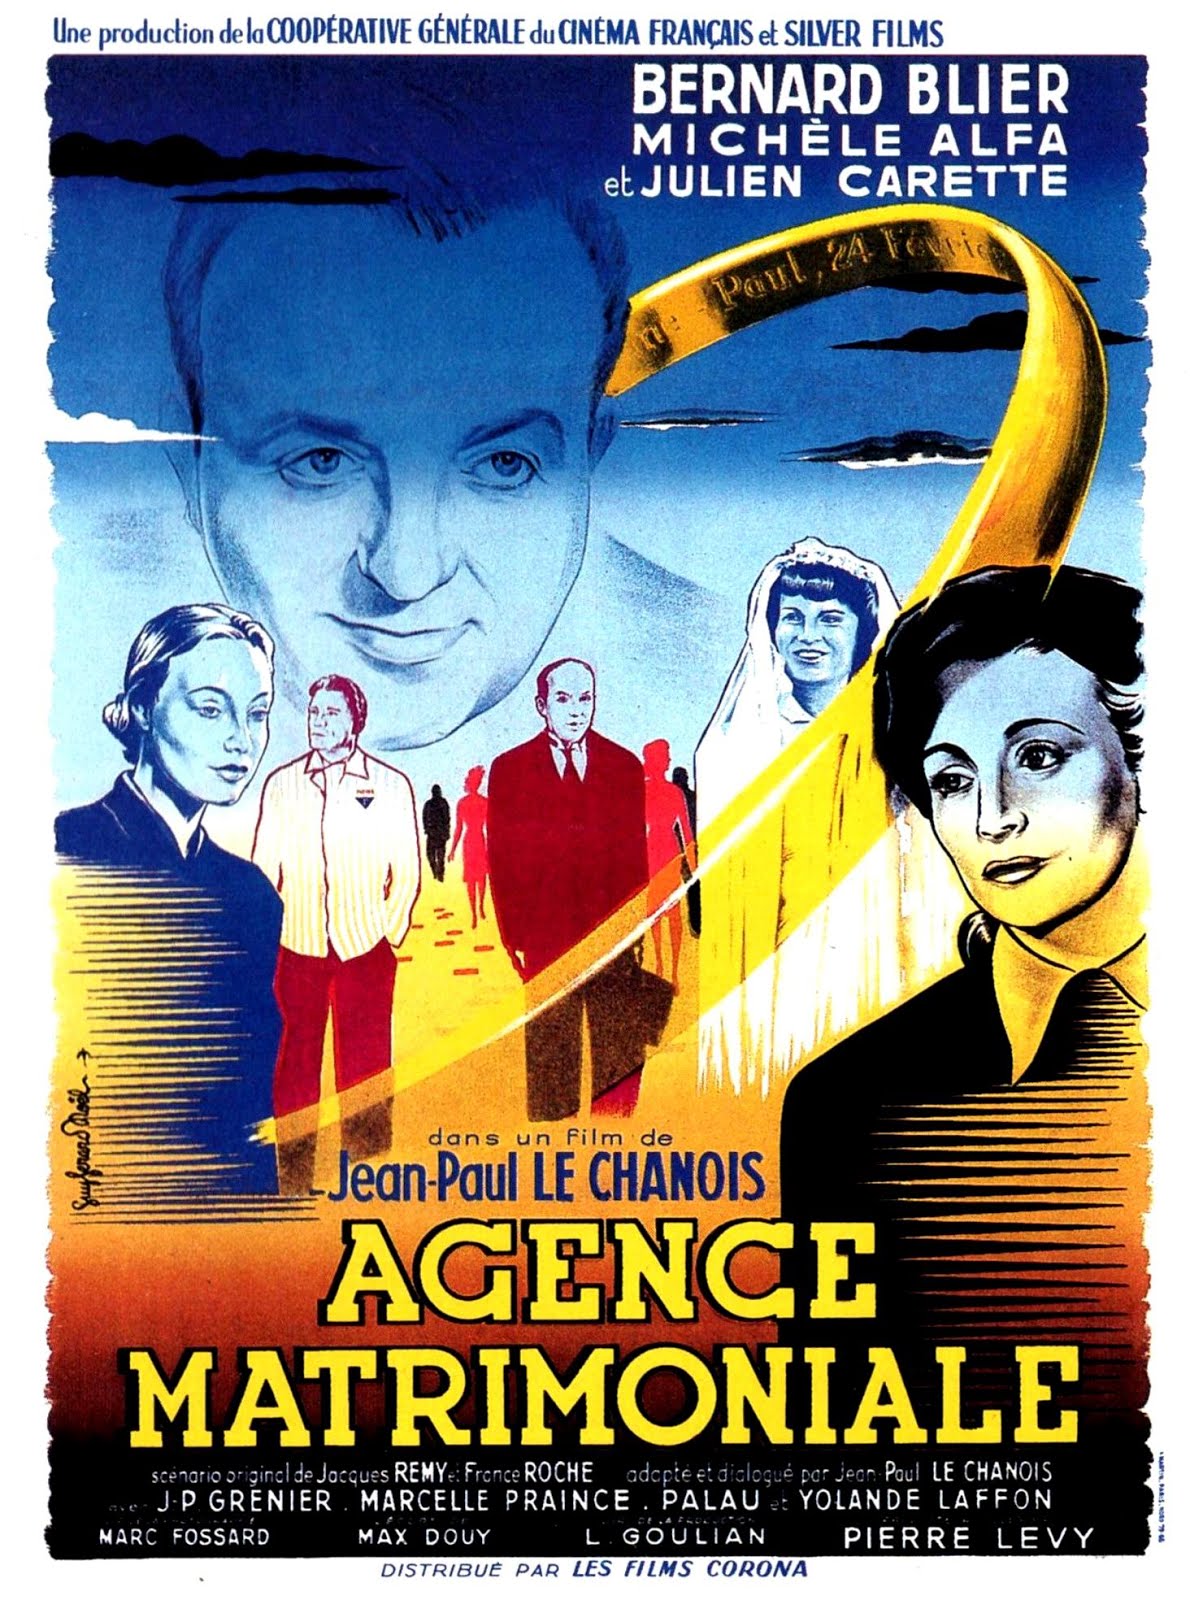 Agence matrimoniale (1951) Jean-Paul Le Chanois - Agence matrimoniale (25.09.1951 / 10.11.1951)